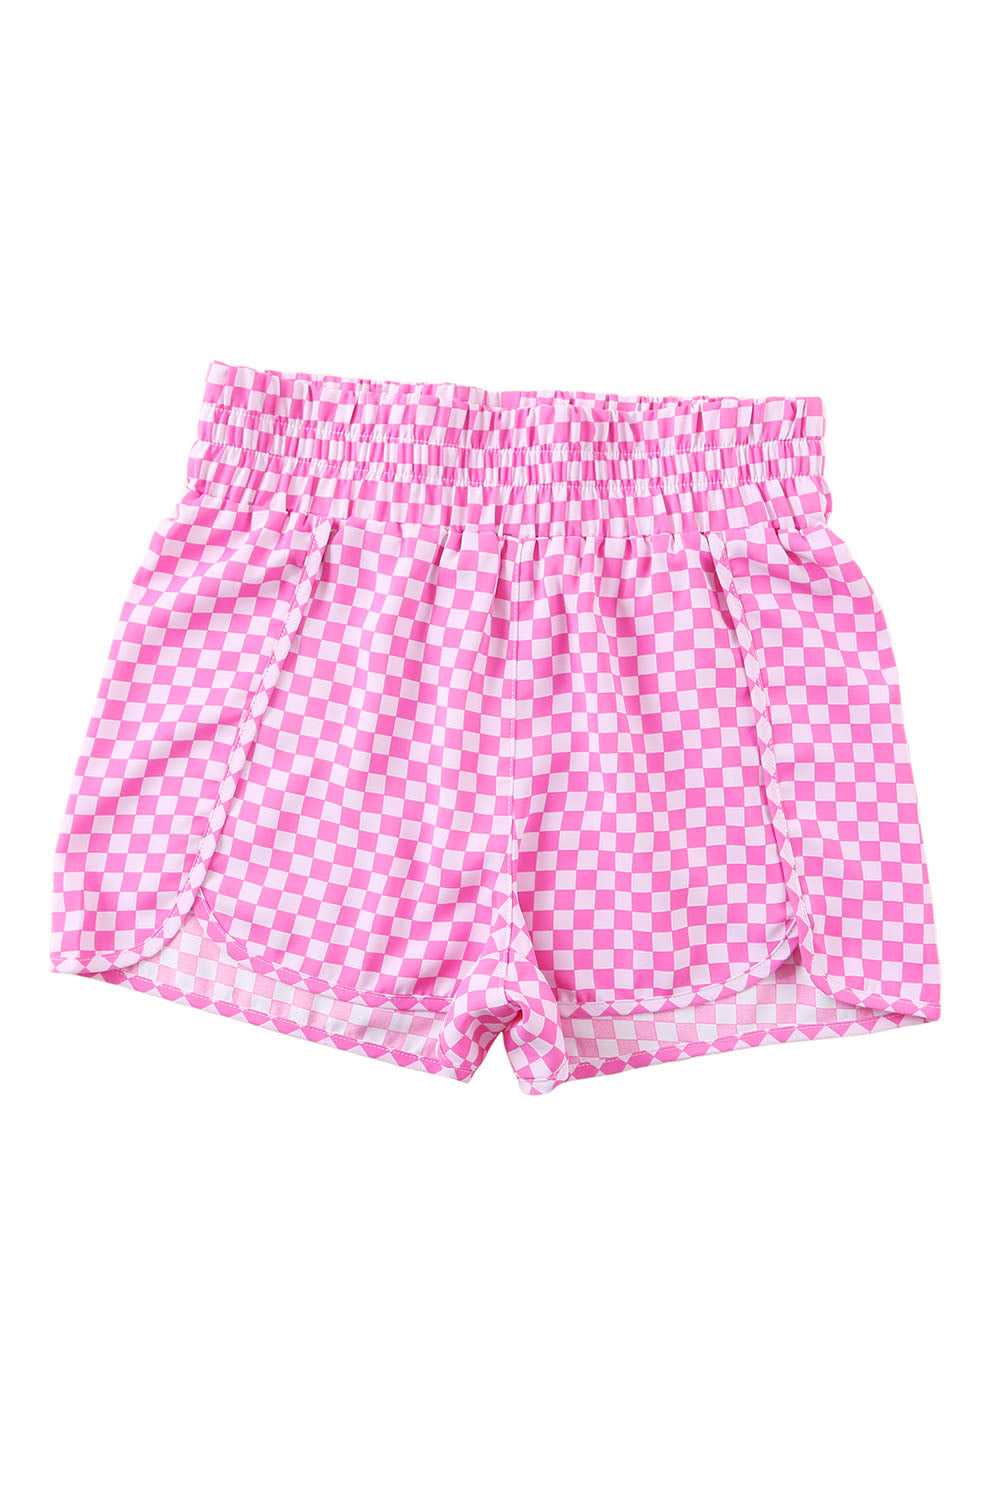 Leopard Elastic Waist Shorts - Women’s Clothing & Accessories - Shorts - 25 - 2024